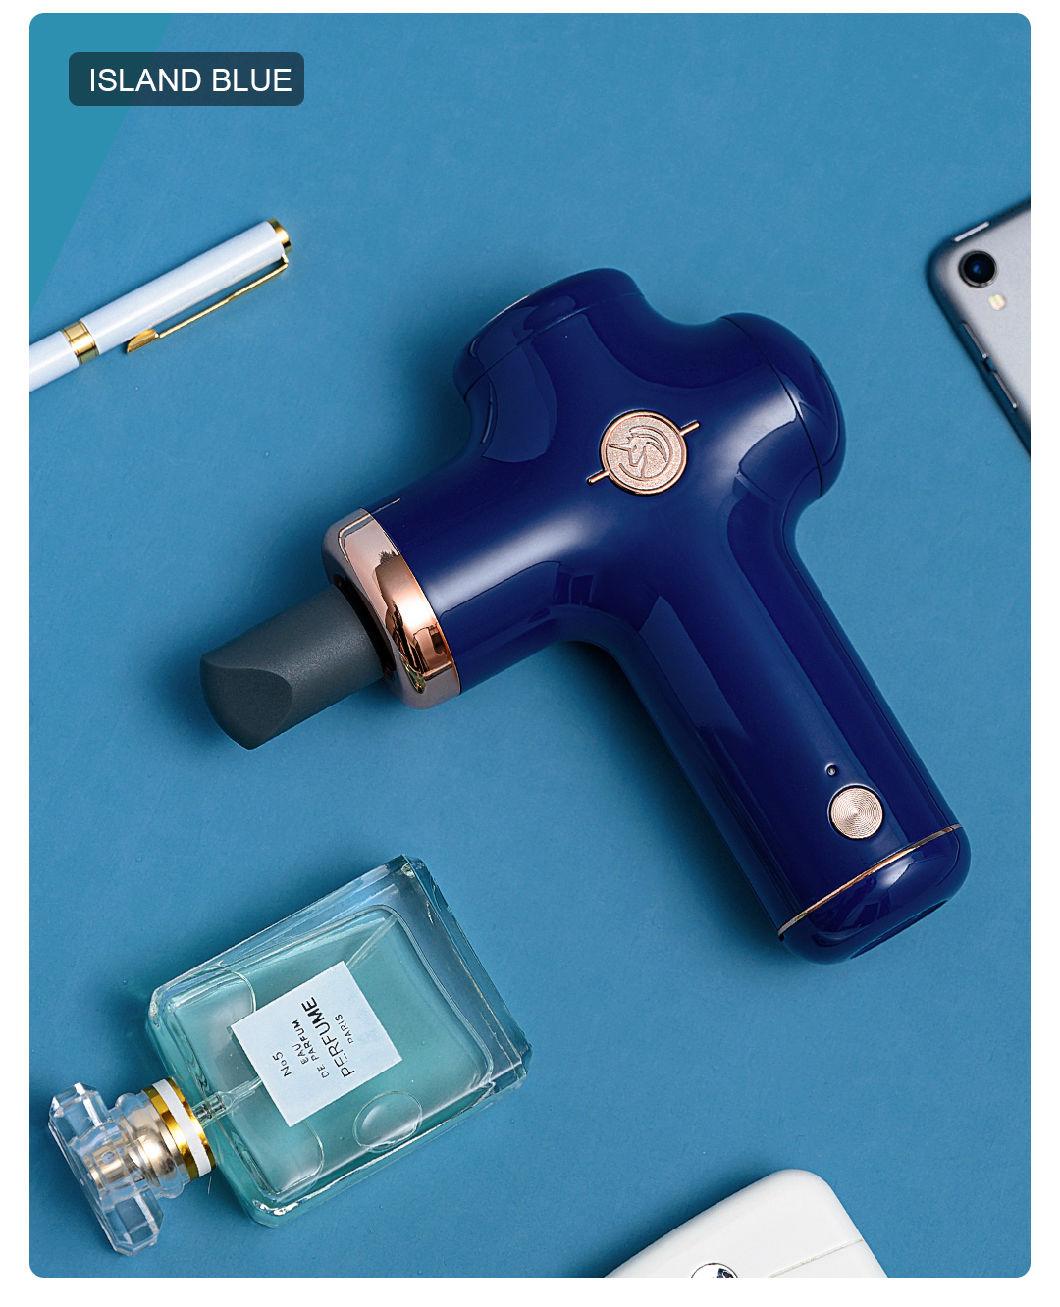 Yesoul Portable Handheld Massager Mini Fascial Massage Gun